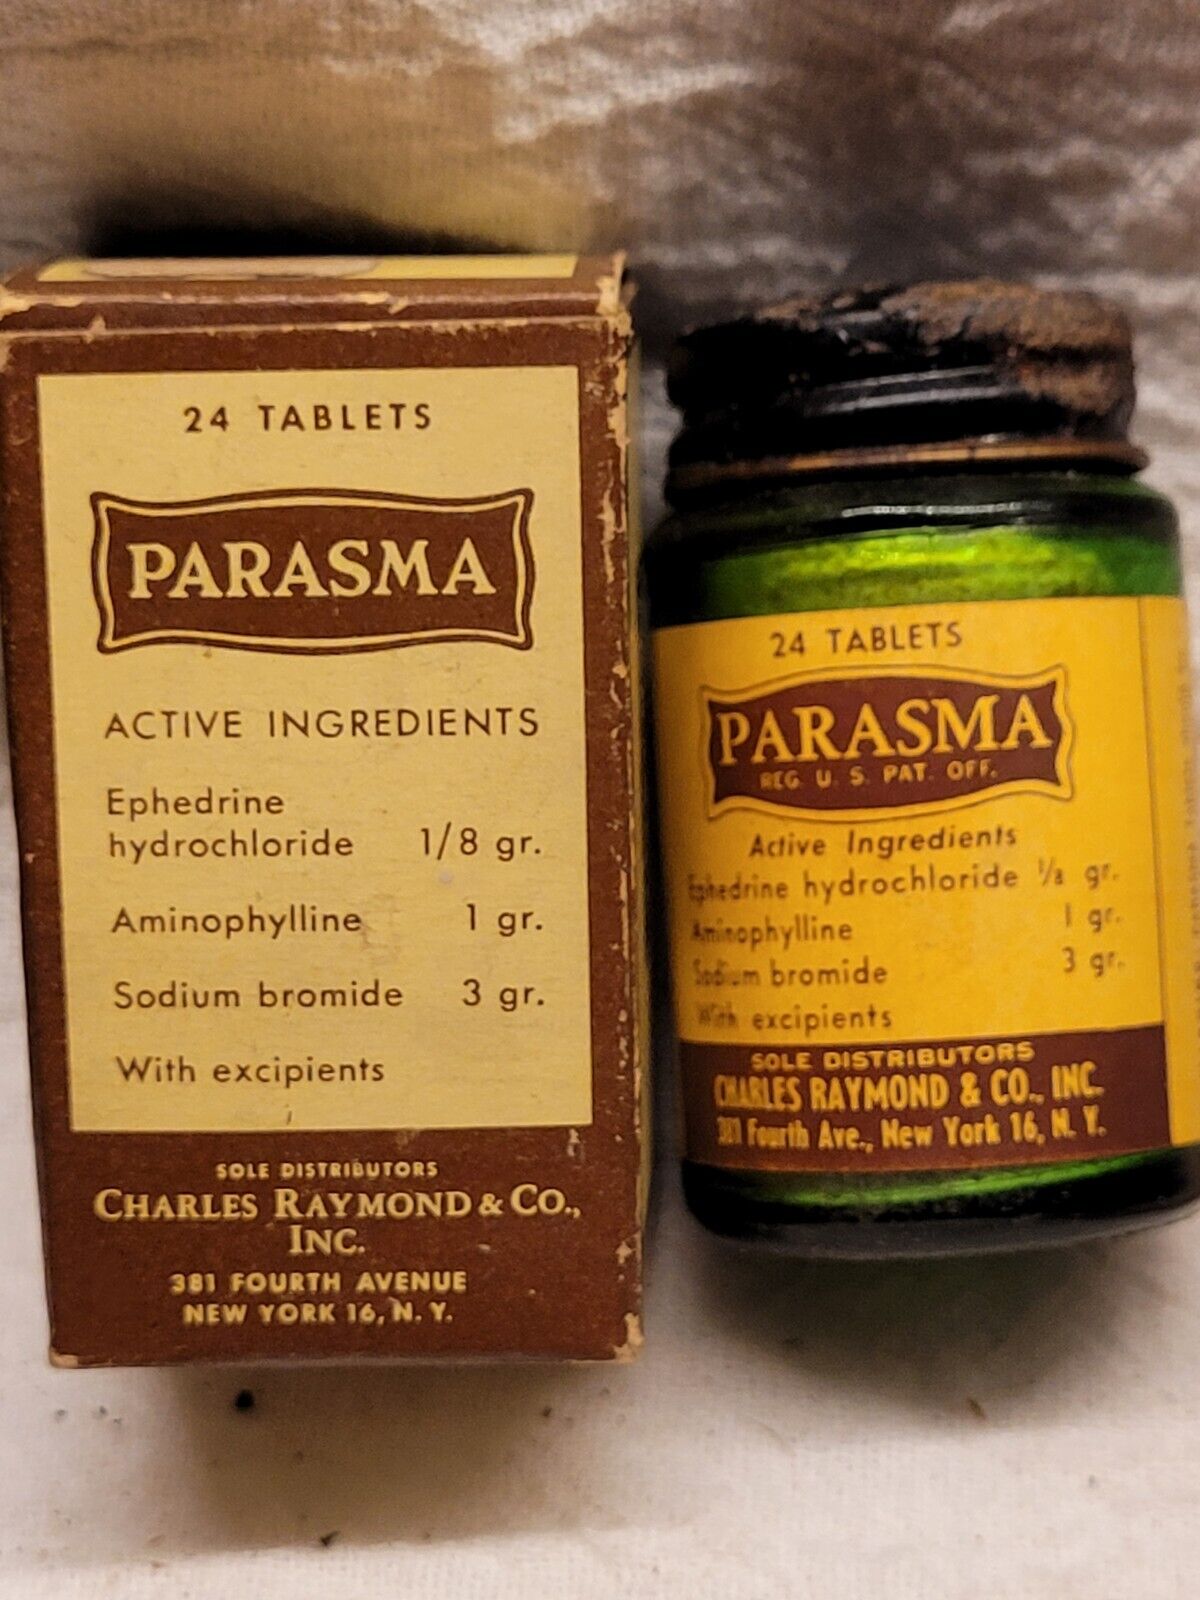 Charles Raymond & Co. NY Parasma Original Wrap Around Label & Box Green Glass 